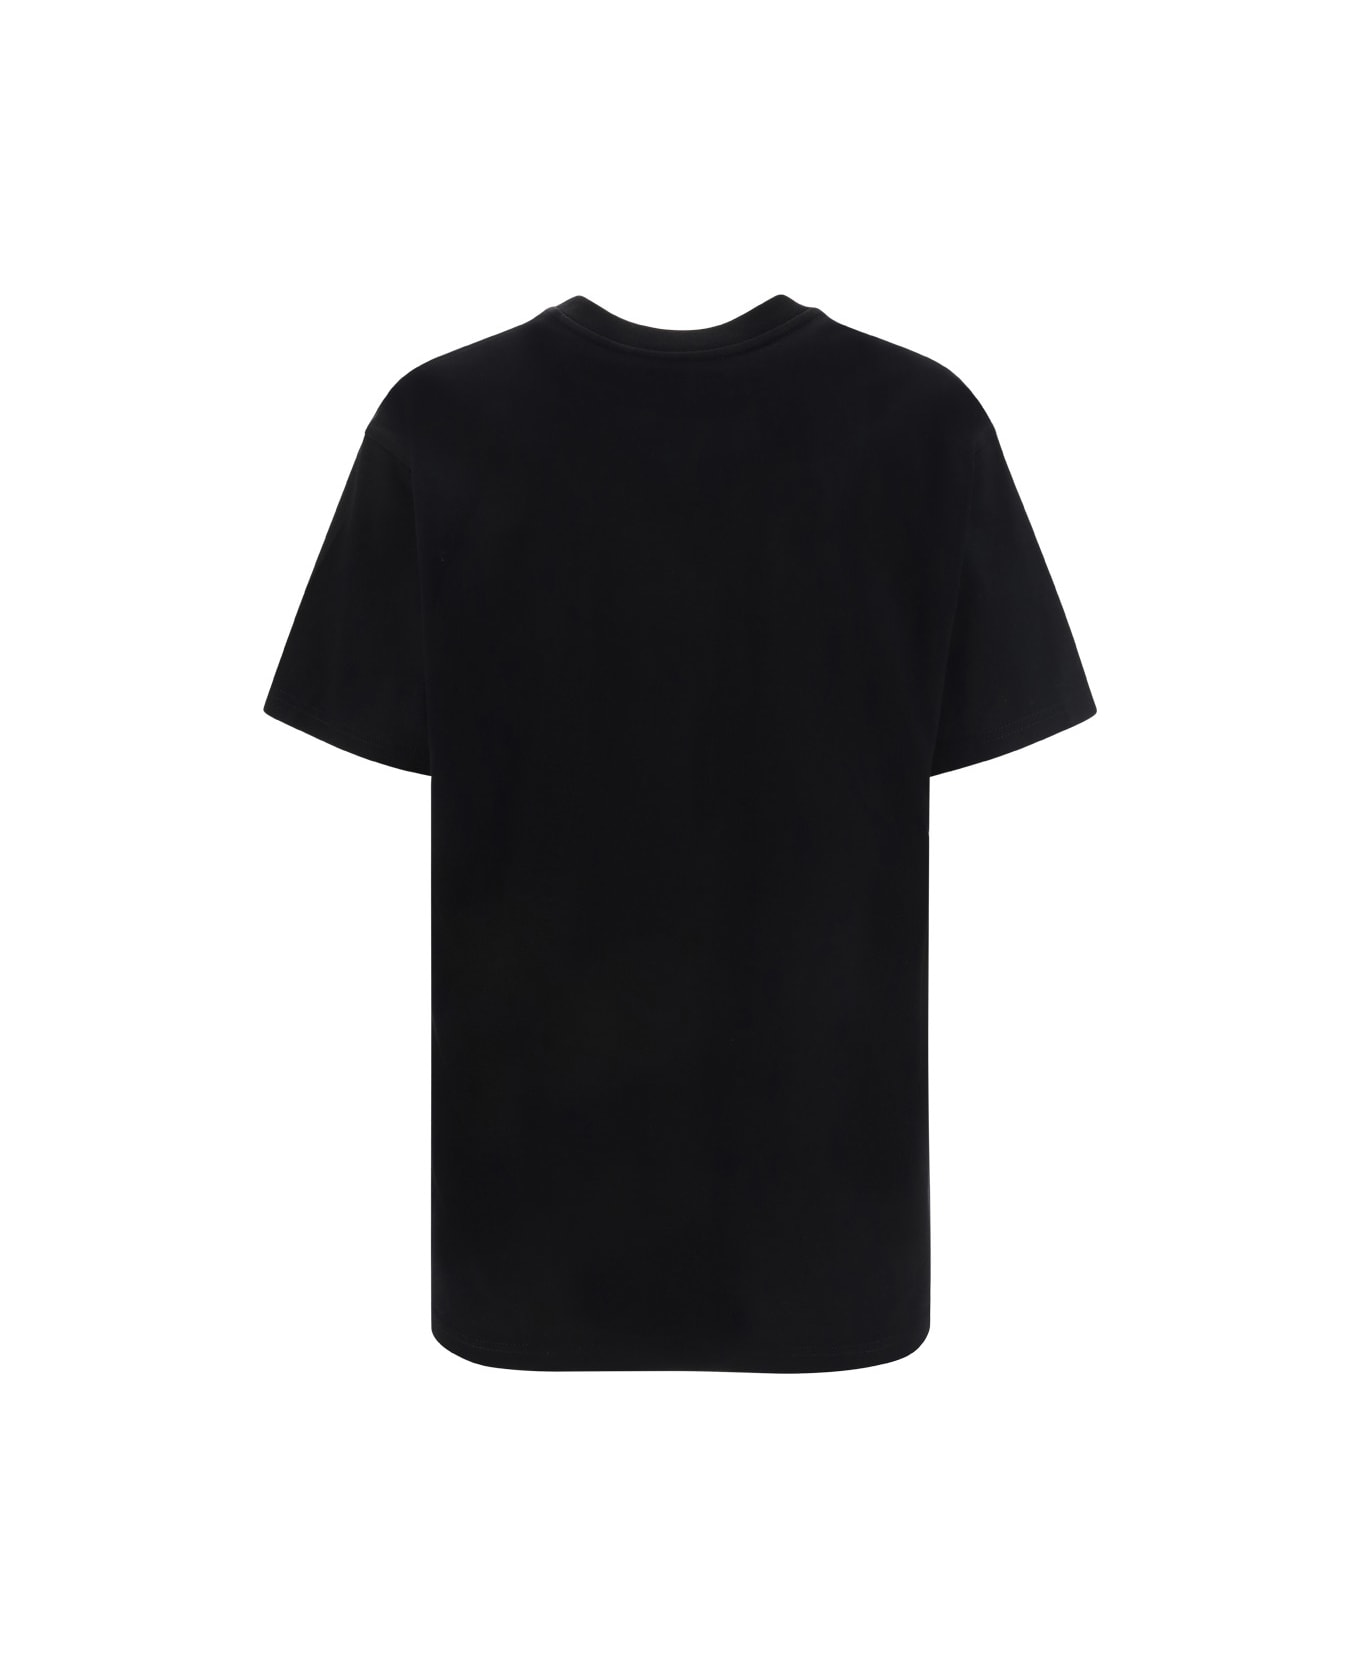 Burberry Carrick T-shirt - Black